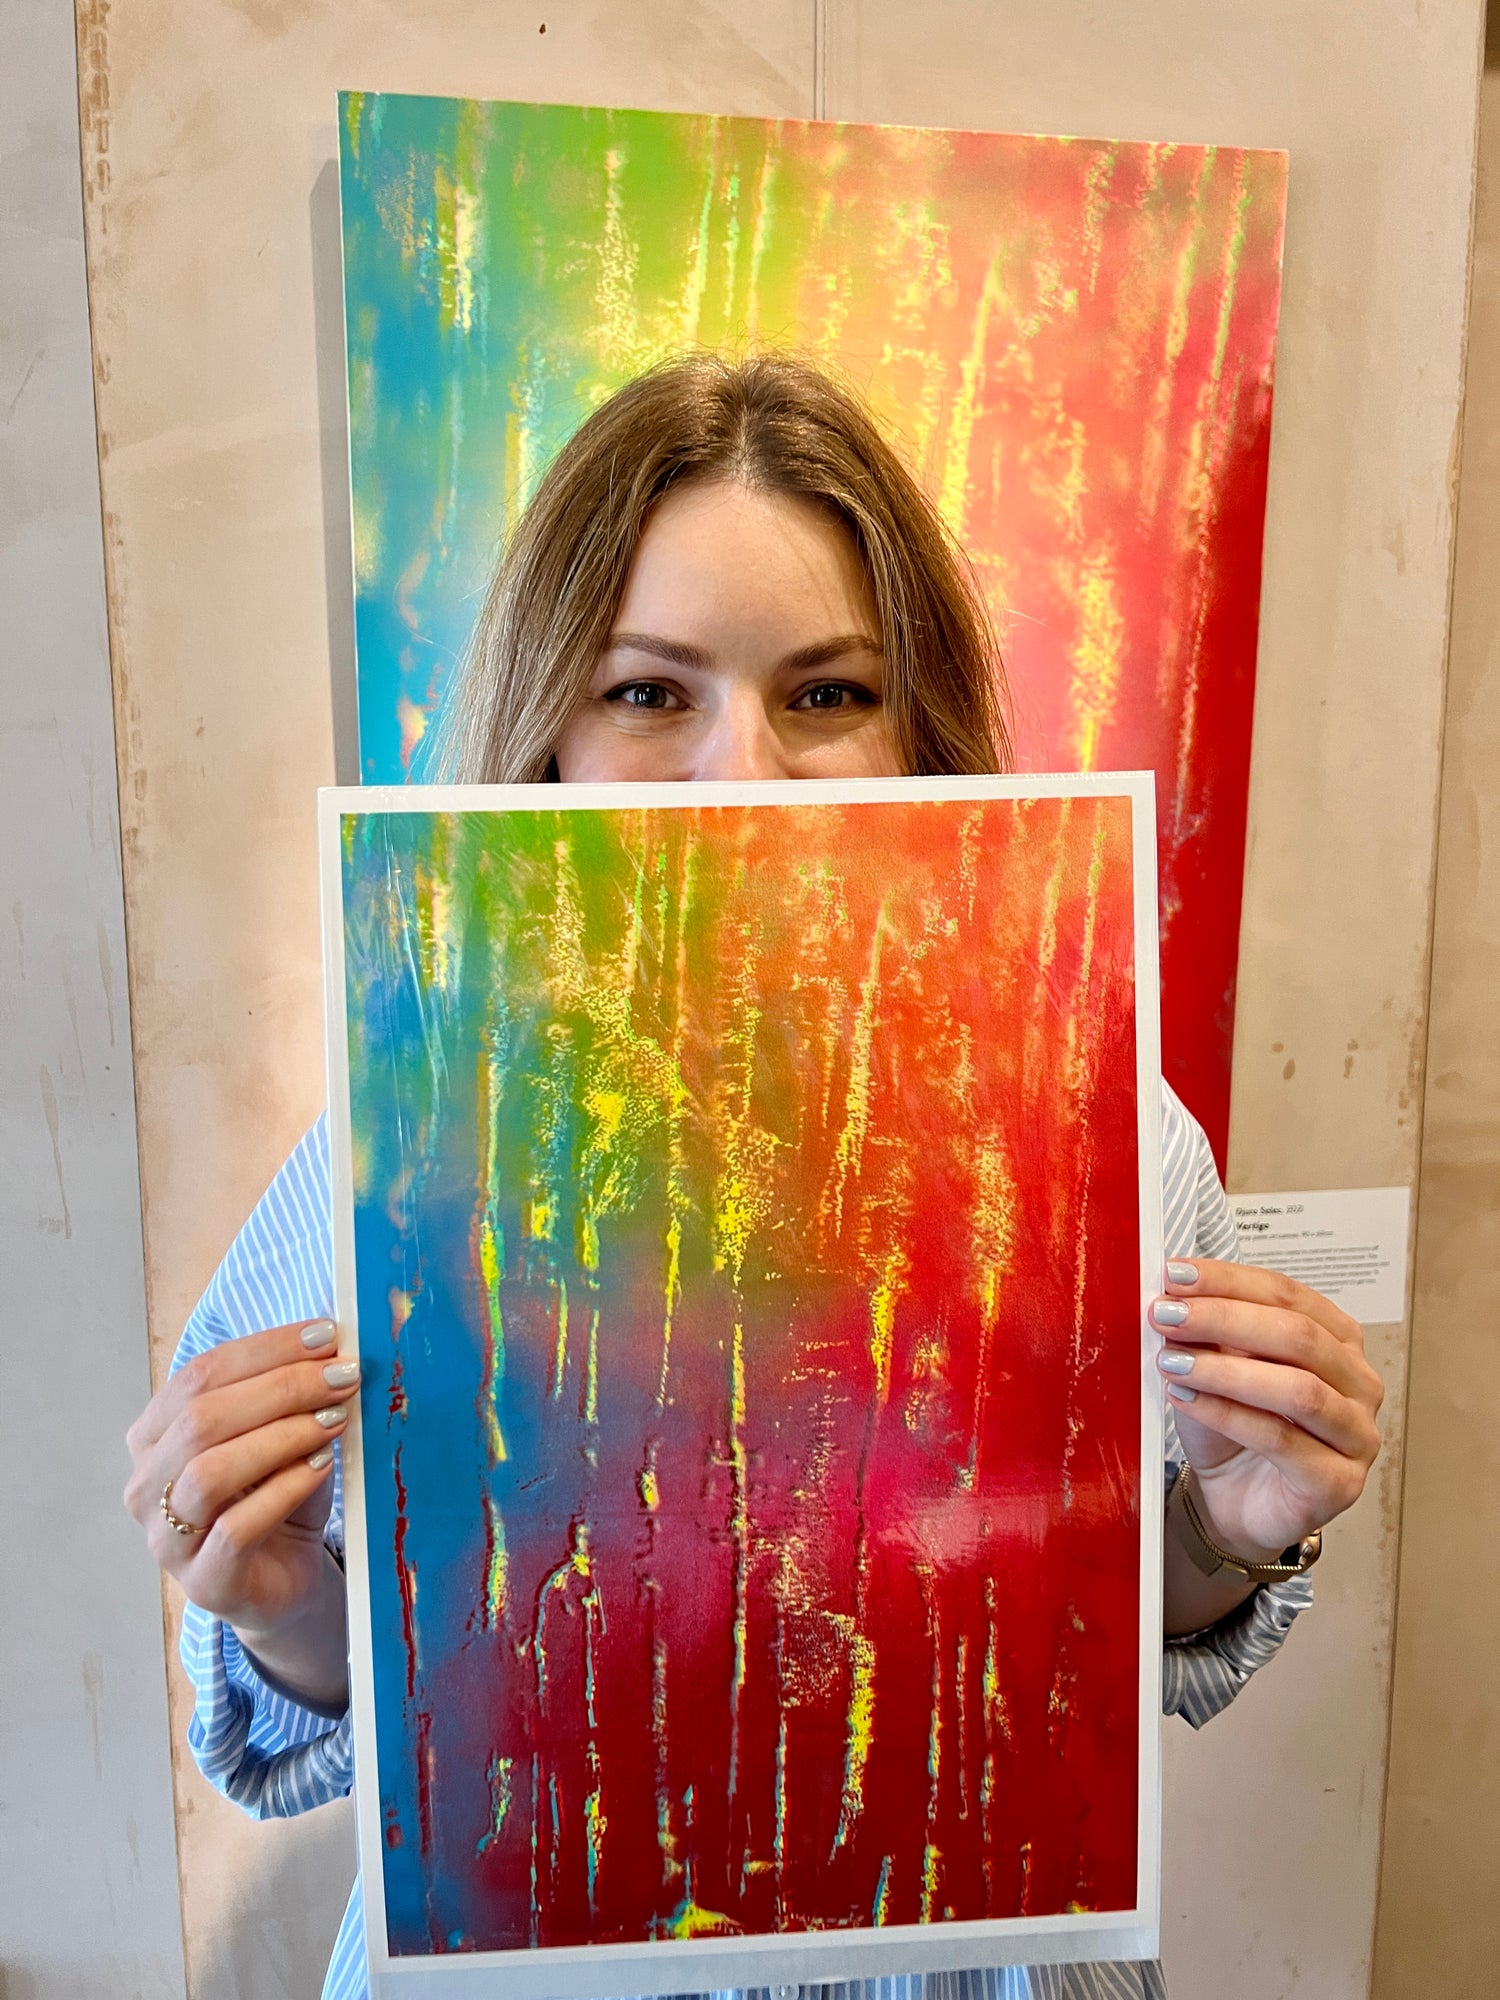 Djuro holding her first Vertigo print in front of the original painting